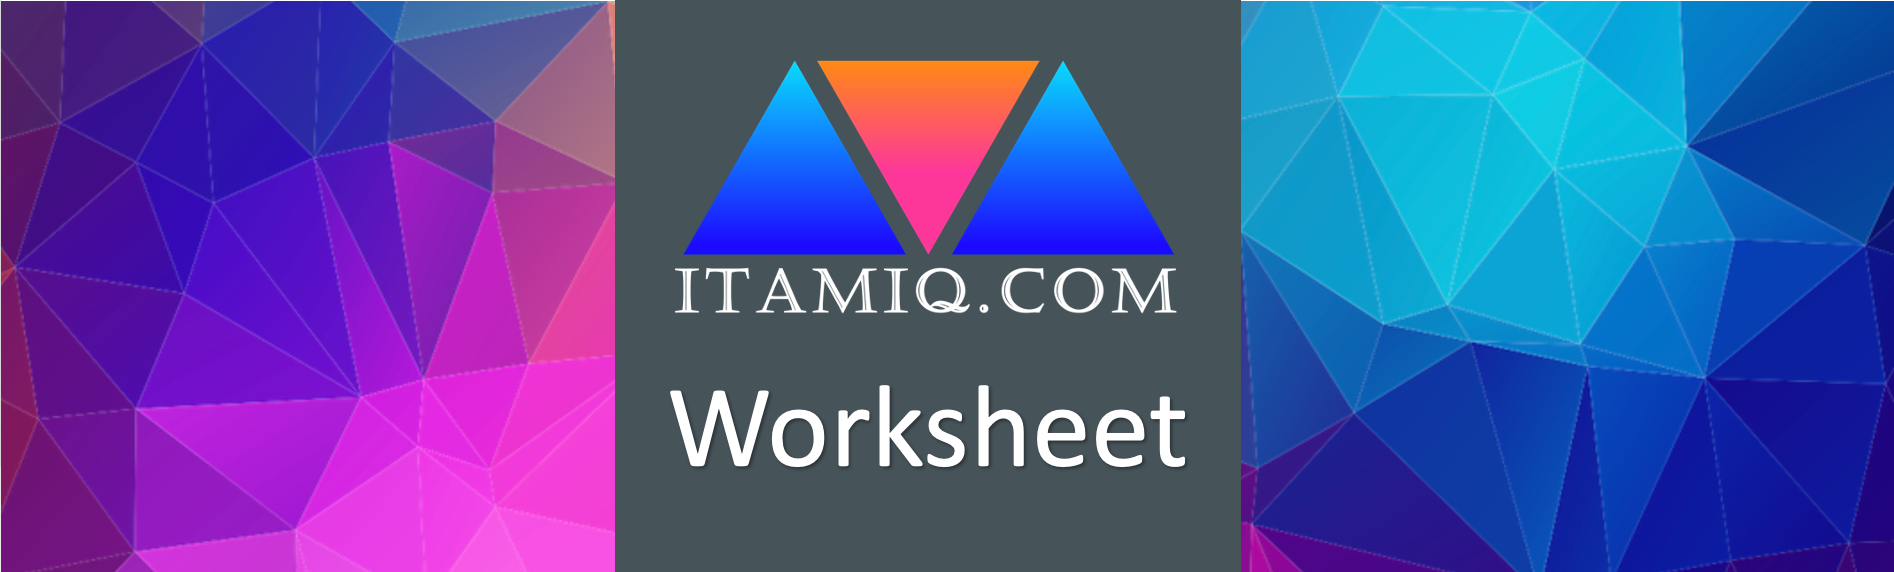 ITAM IQ Worksheet logo